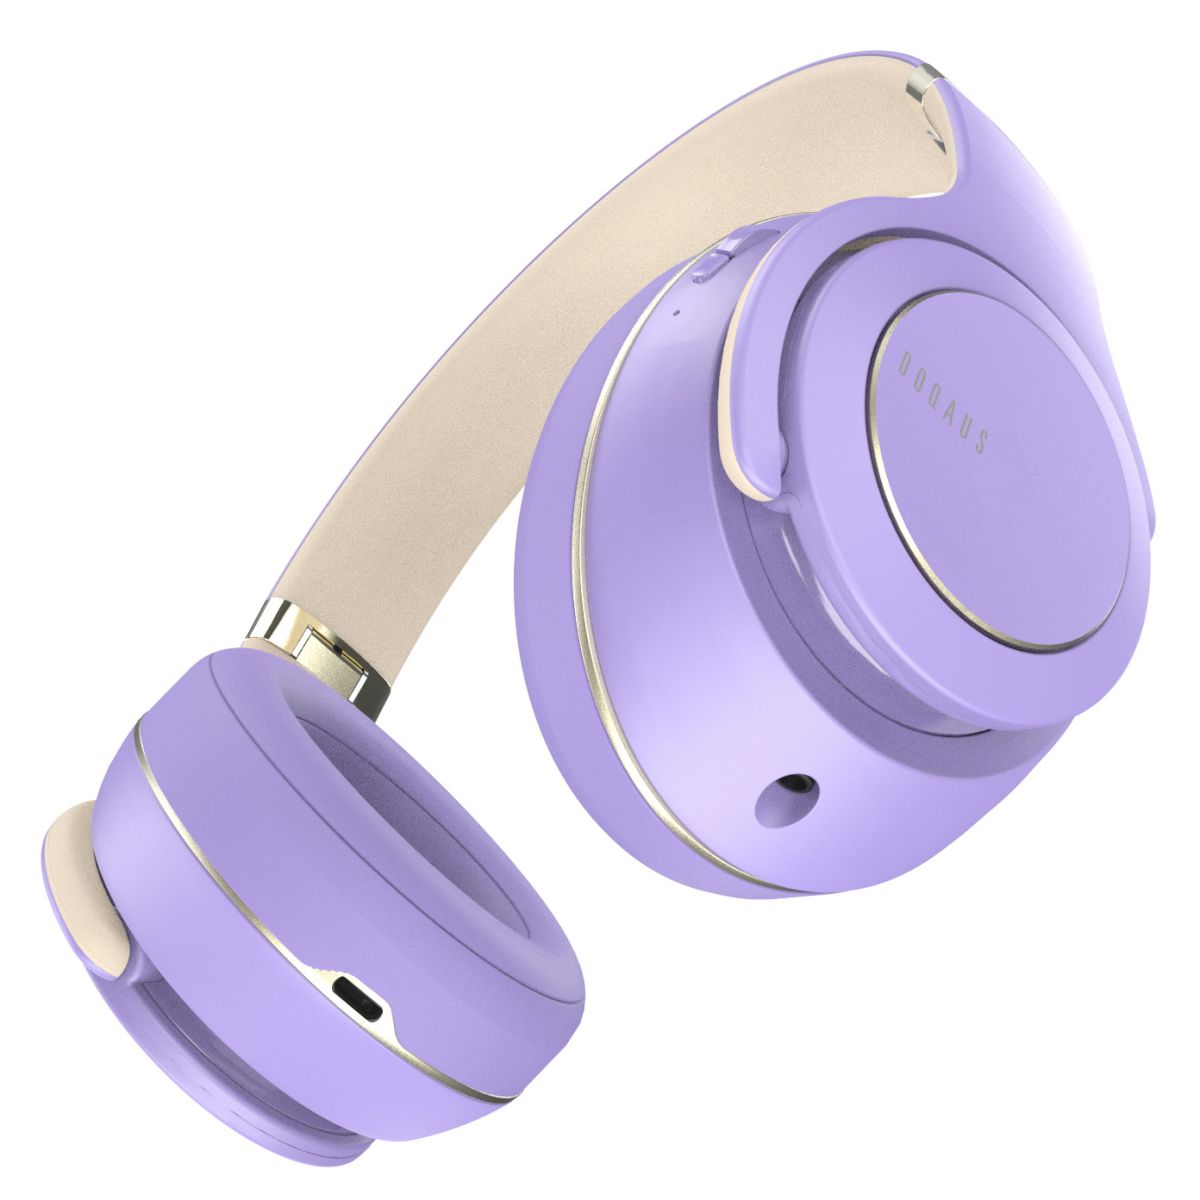 DOQAUS VOGUE 9 Bluetooth Headphones + Speakers - Hugmie